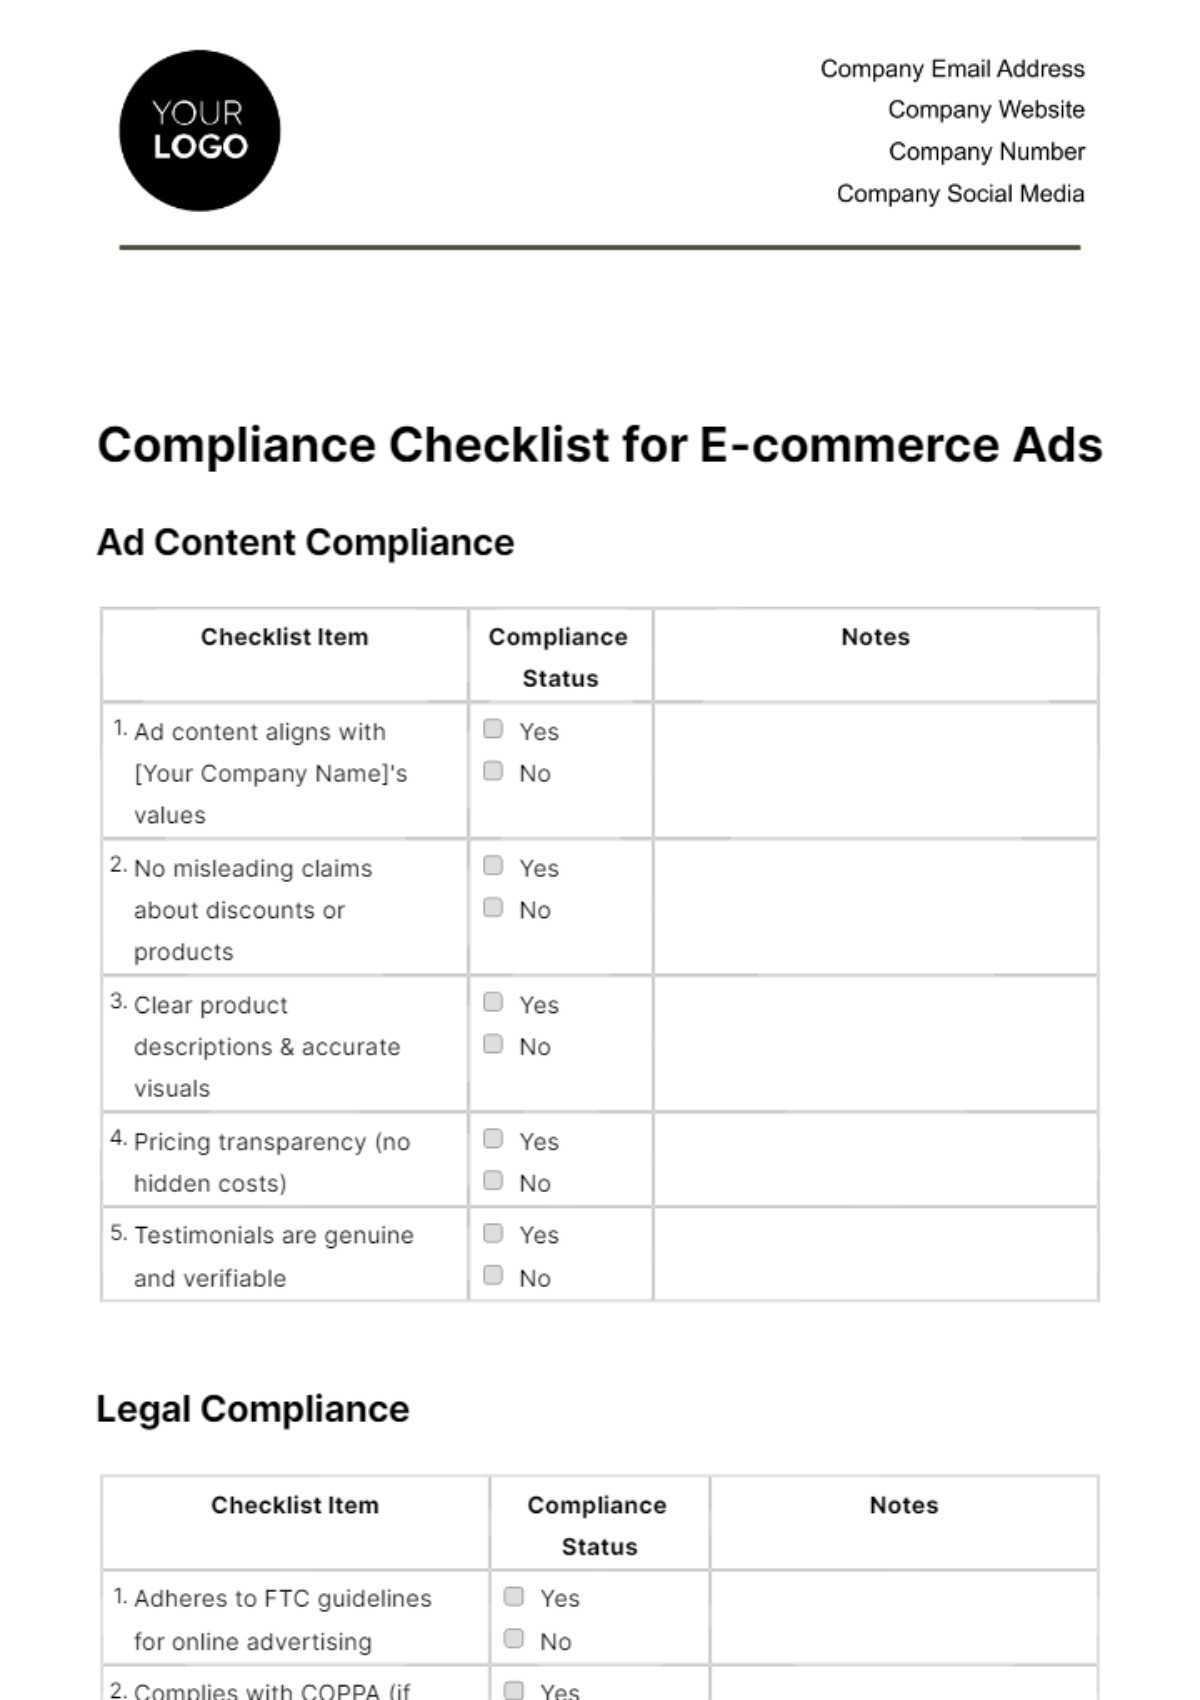 Free Compliance Checklist for E-commerce Ads Template